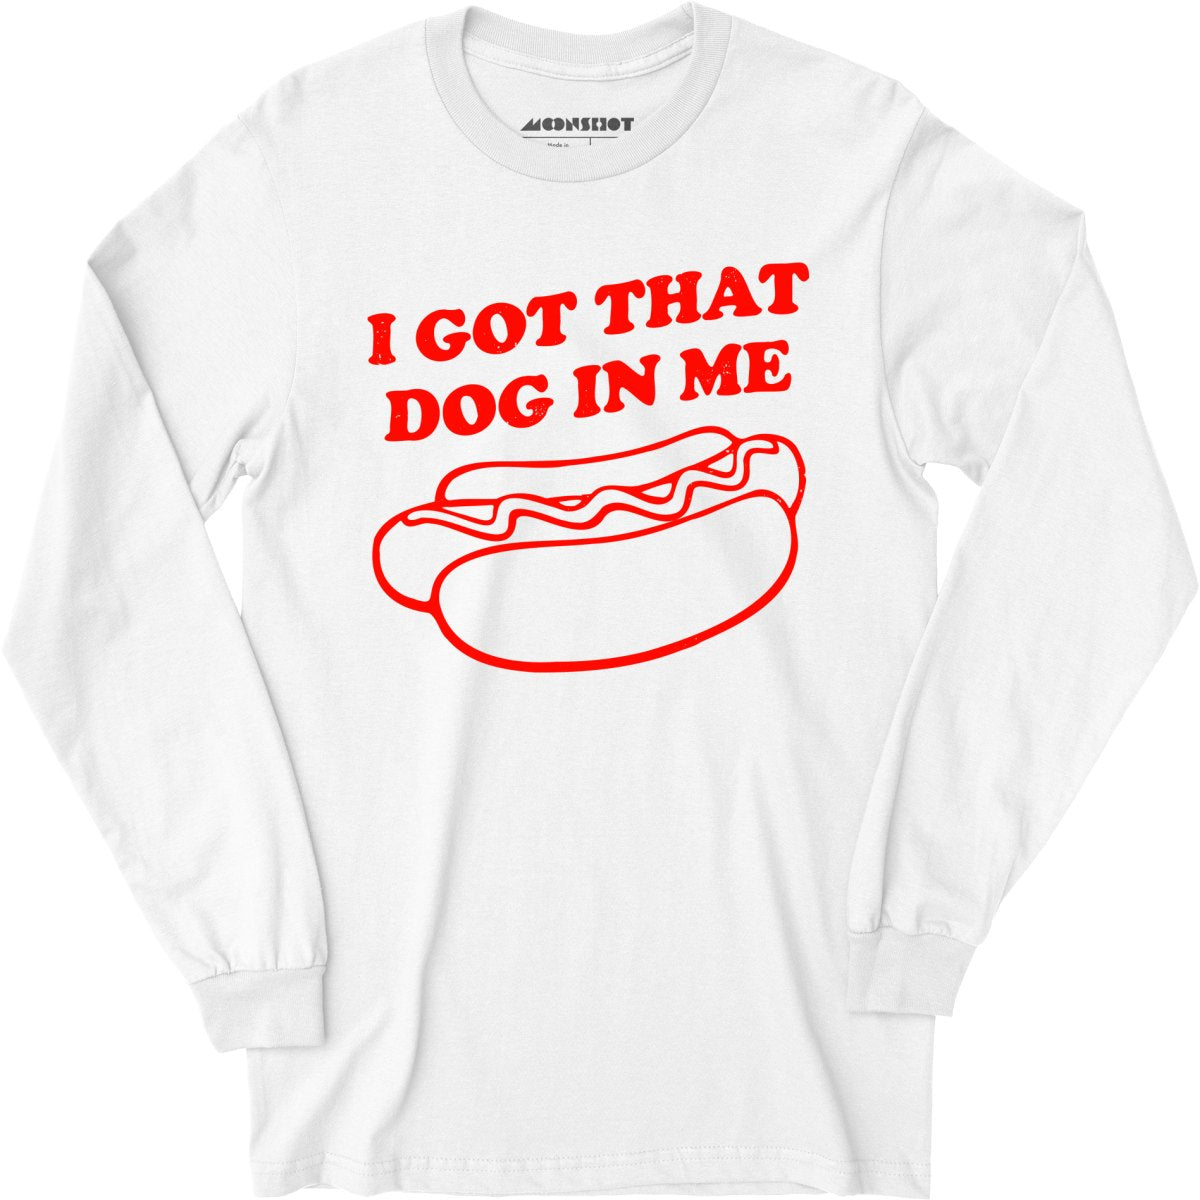 I Got That Dog in Me - Long Sleeve T-Shirt